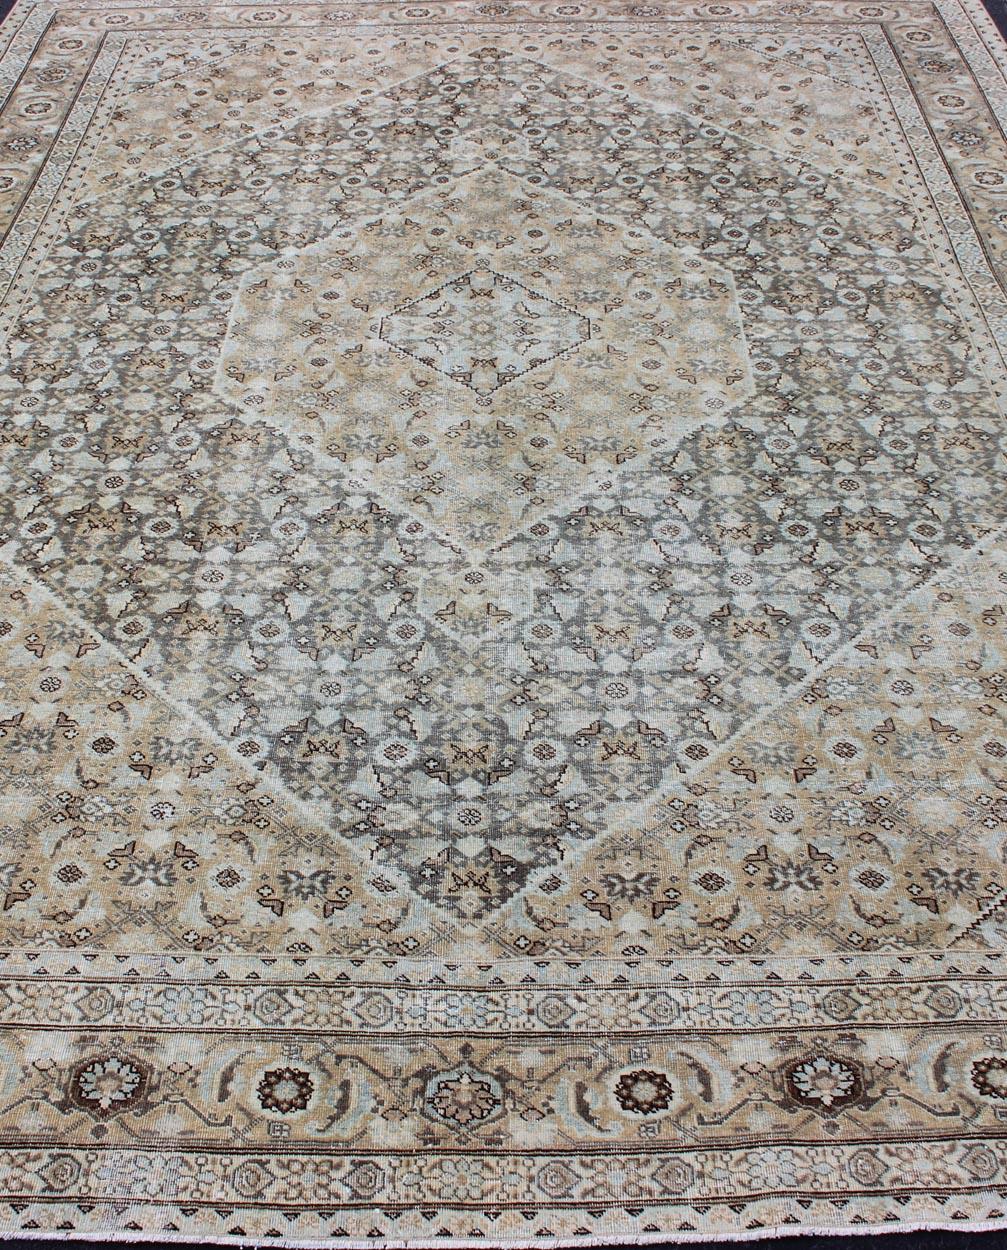 Antique Persian Tabriz Carpet with Geometric Diamond Design in Earth Tones For Sale 5